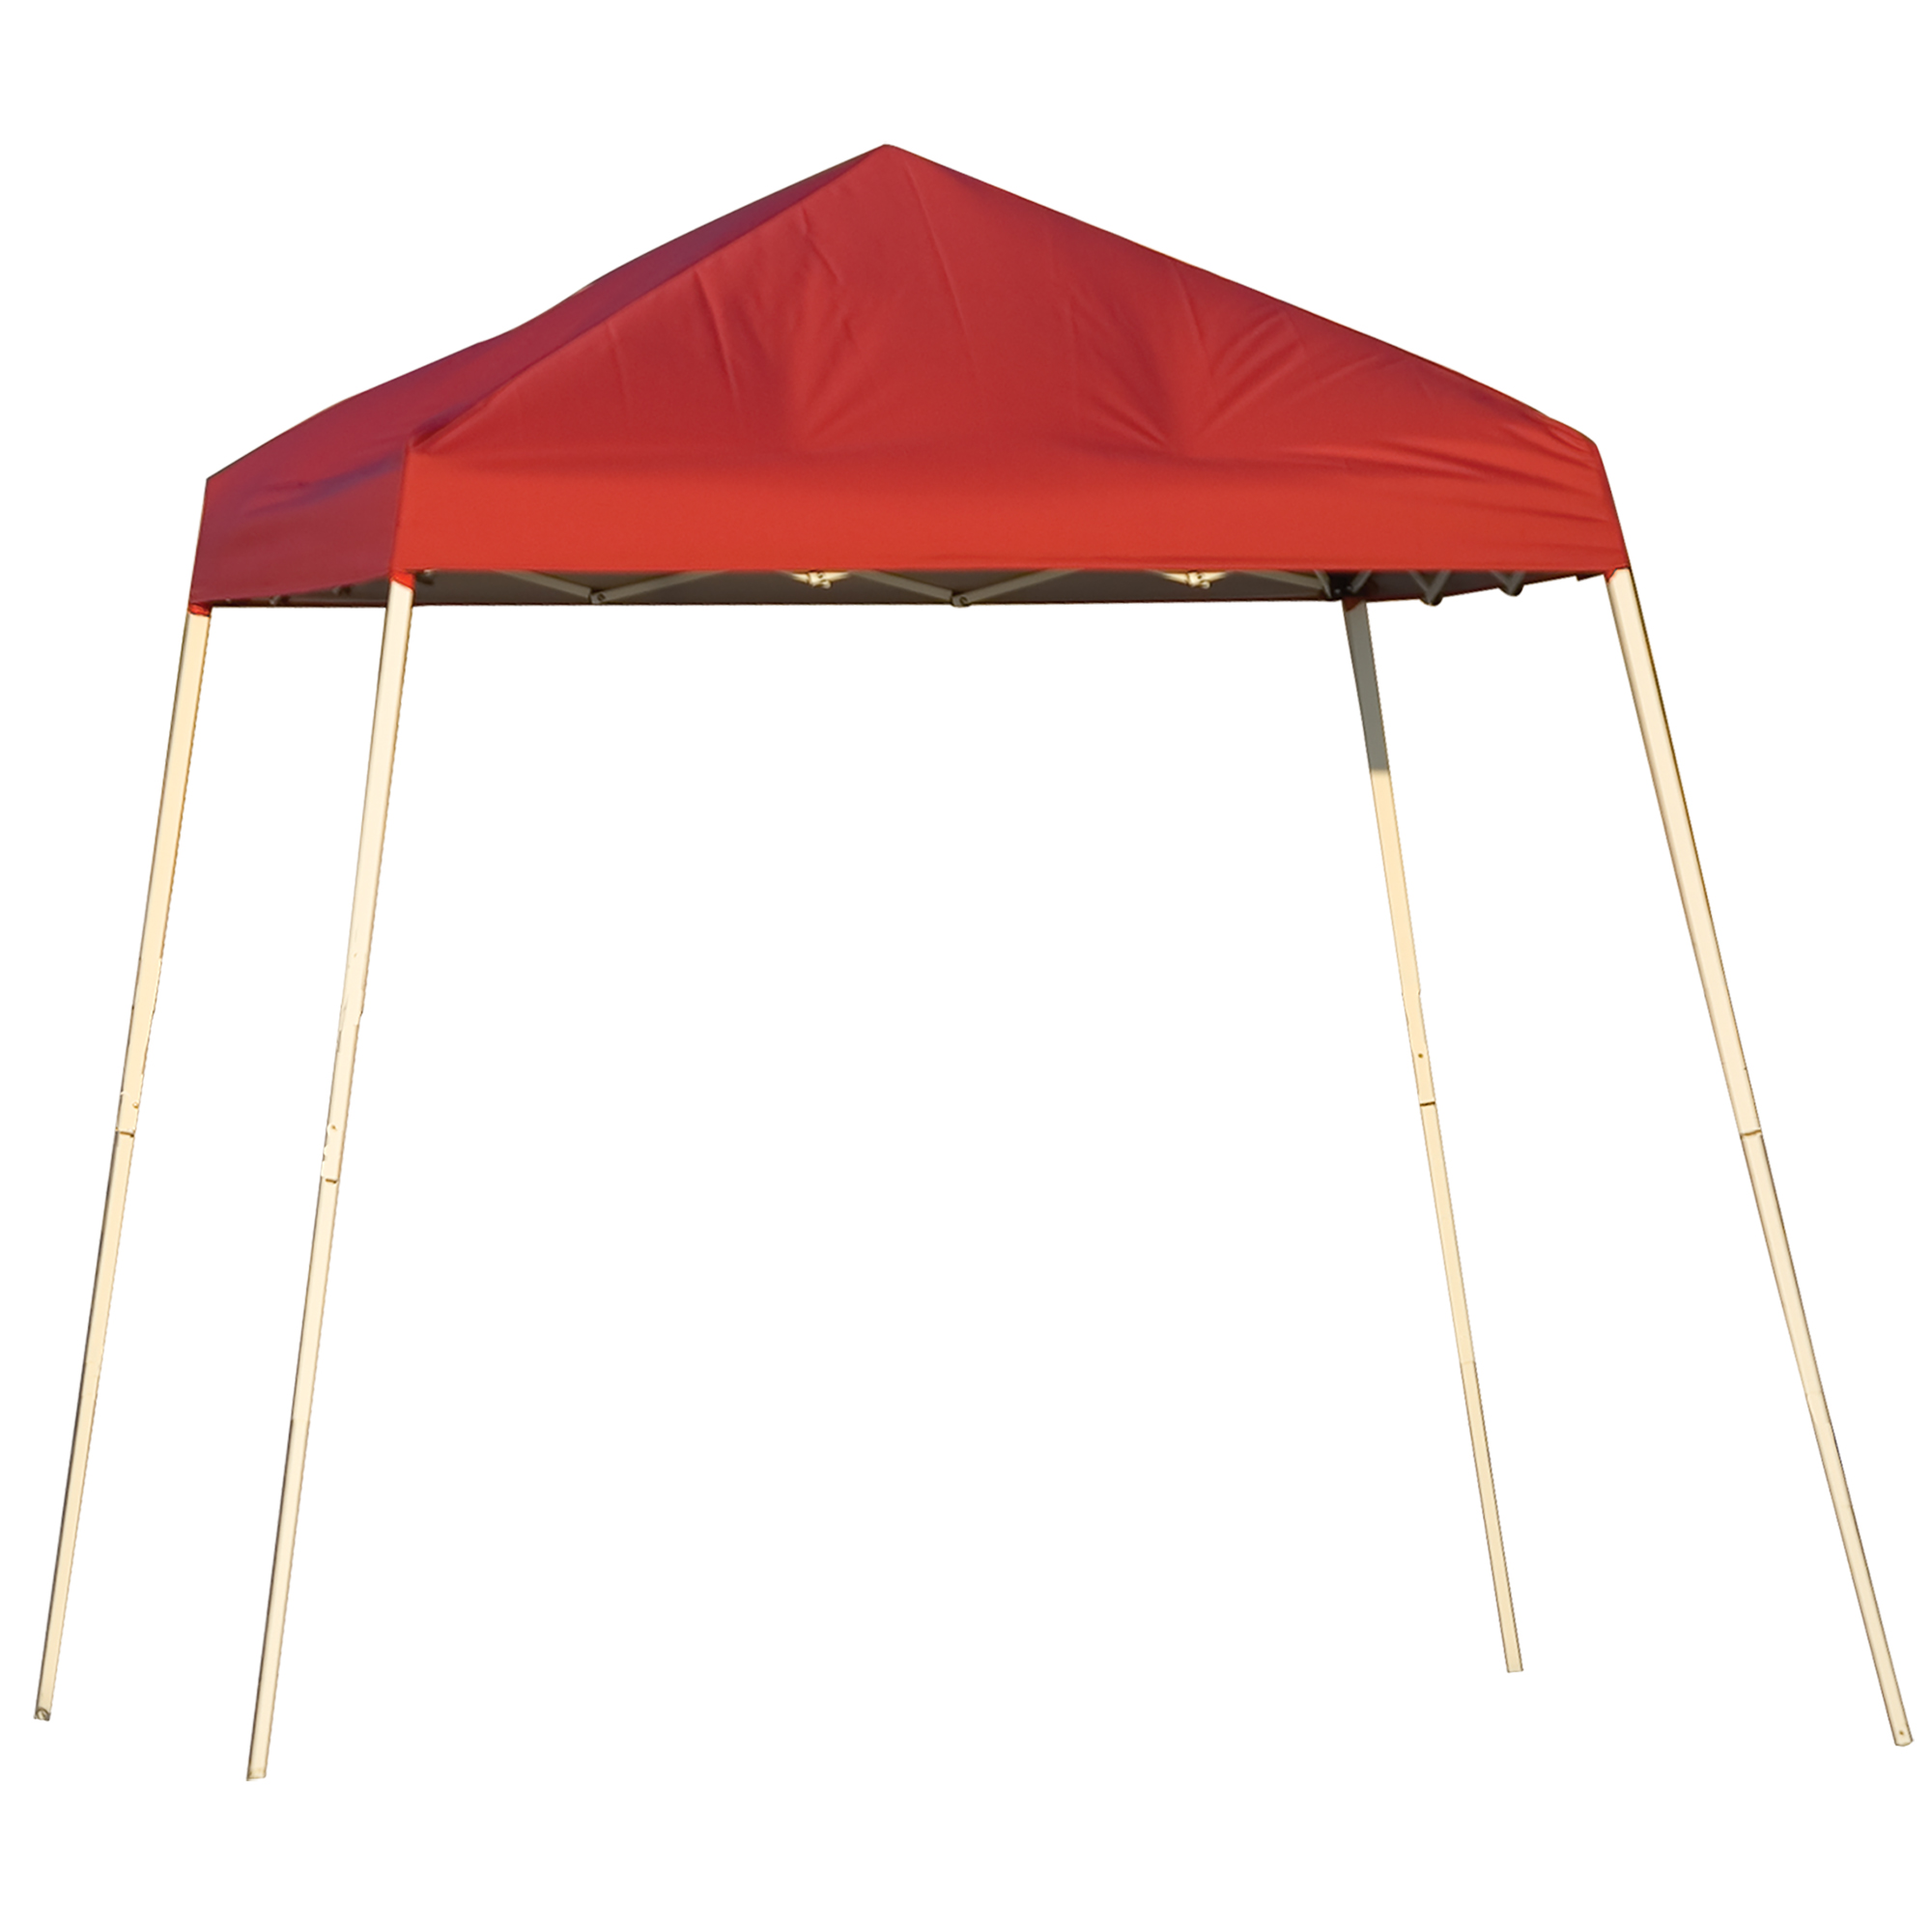 8 Ft. X 8 Ft. Sport Pop-up Canopy Slant Leg, Red Cover